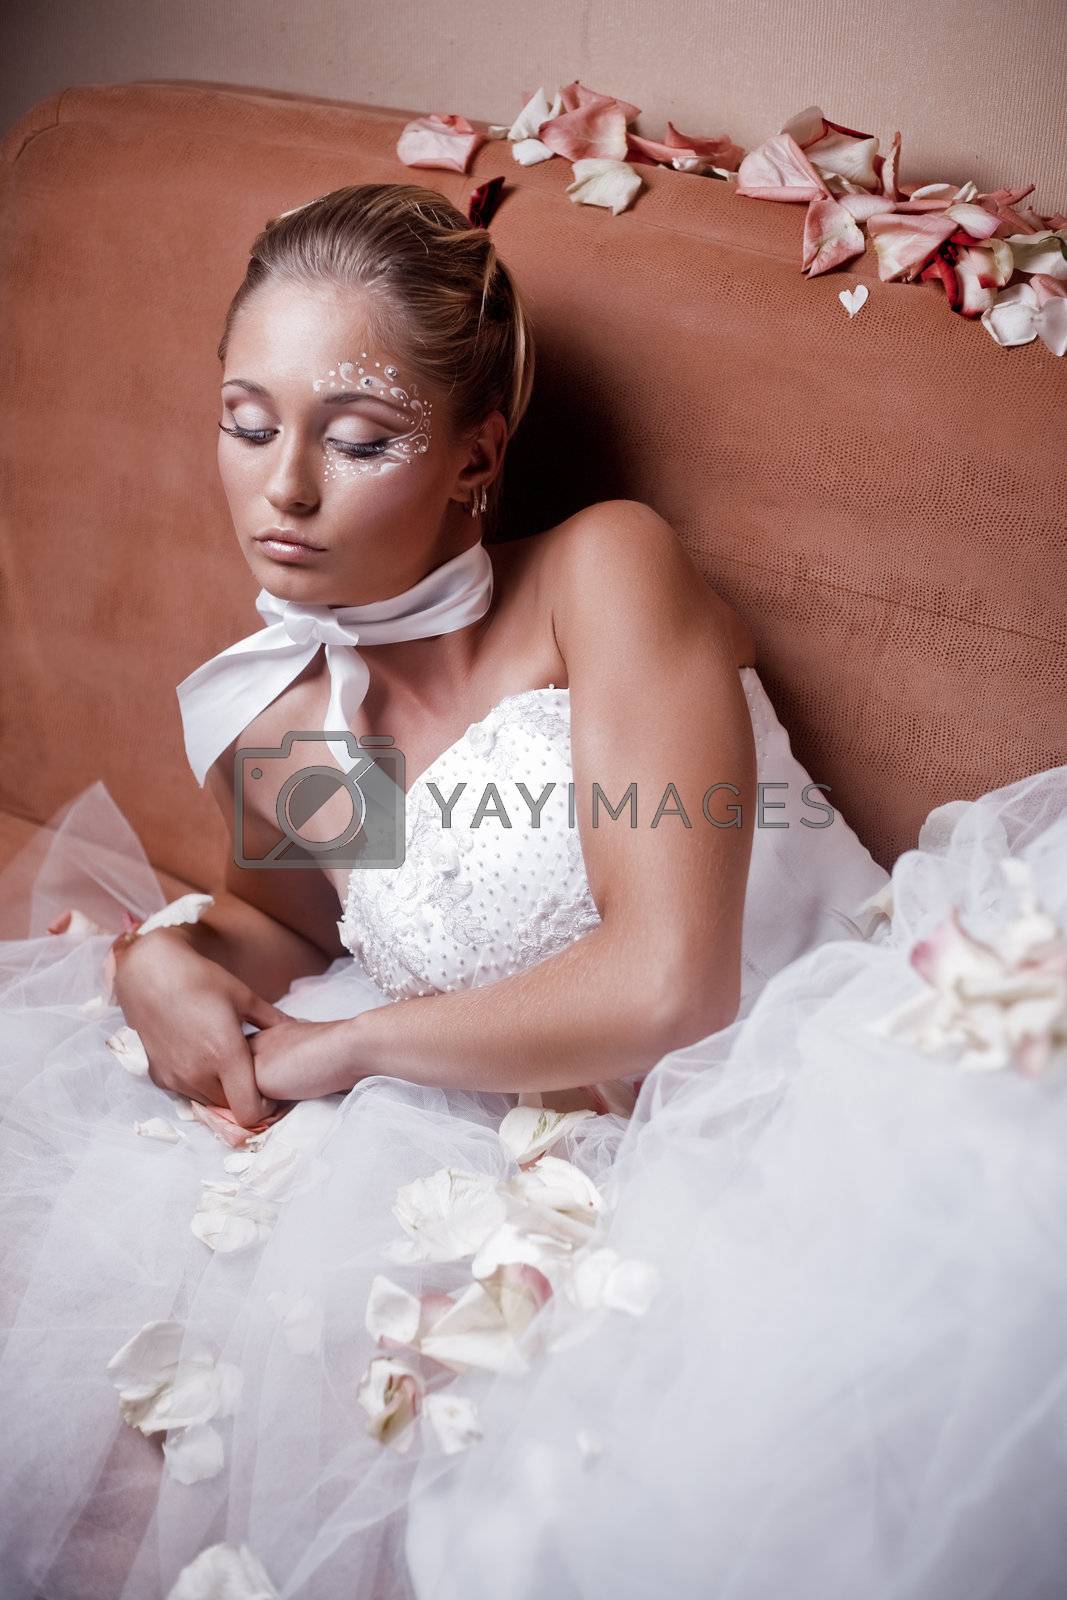 Royalty free image of Beautiful bride by alenkasm